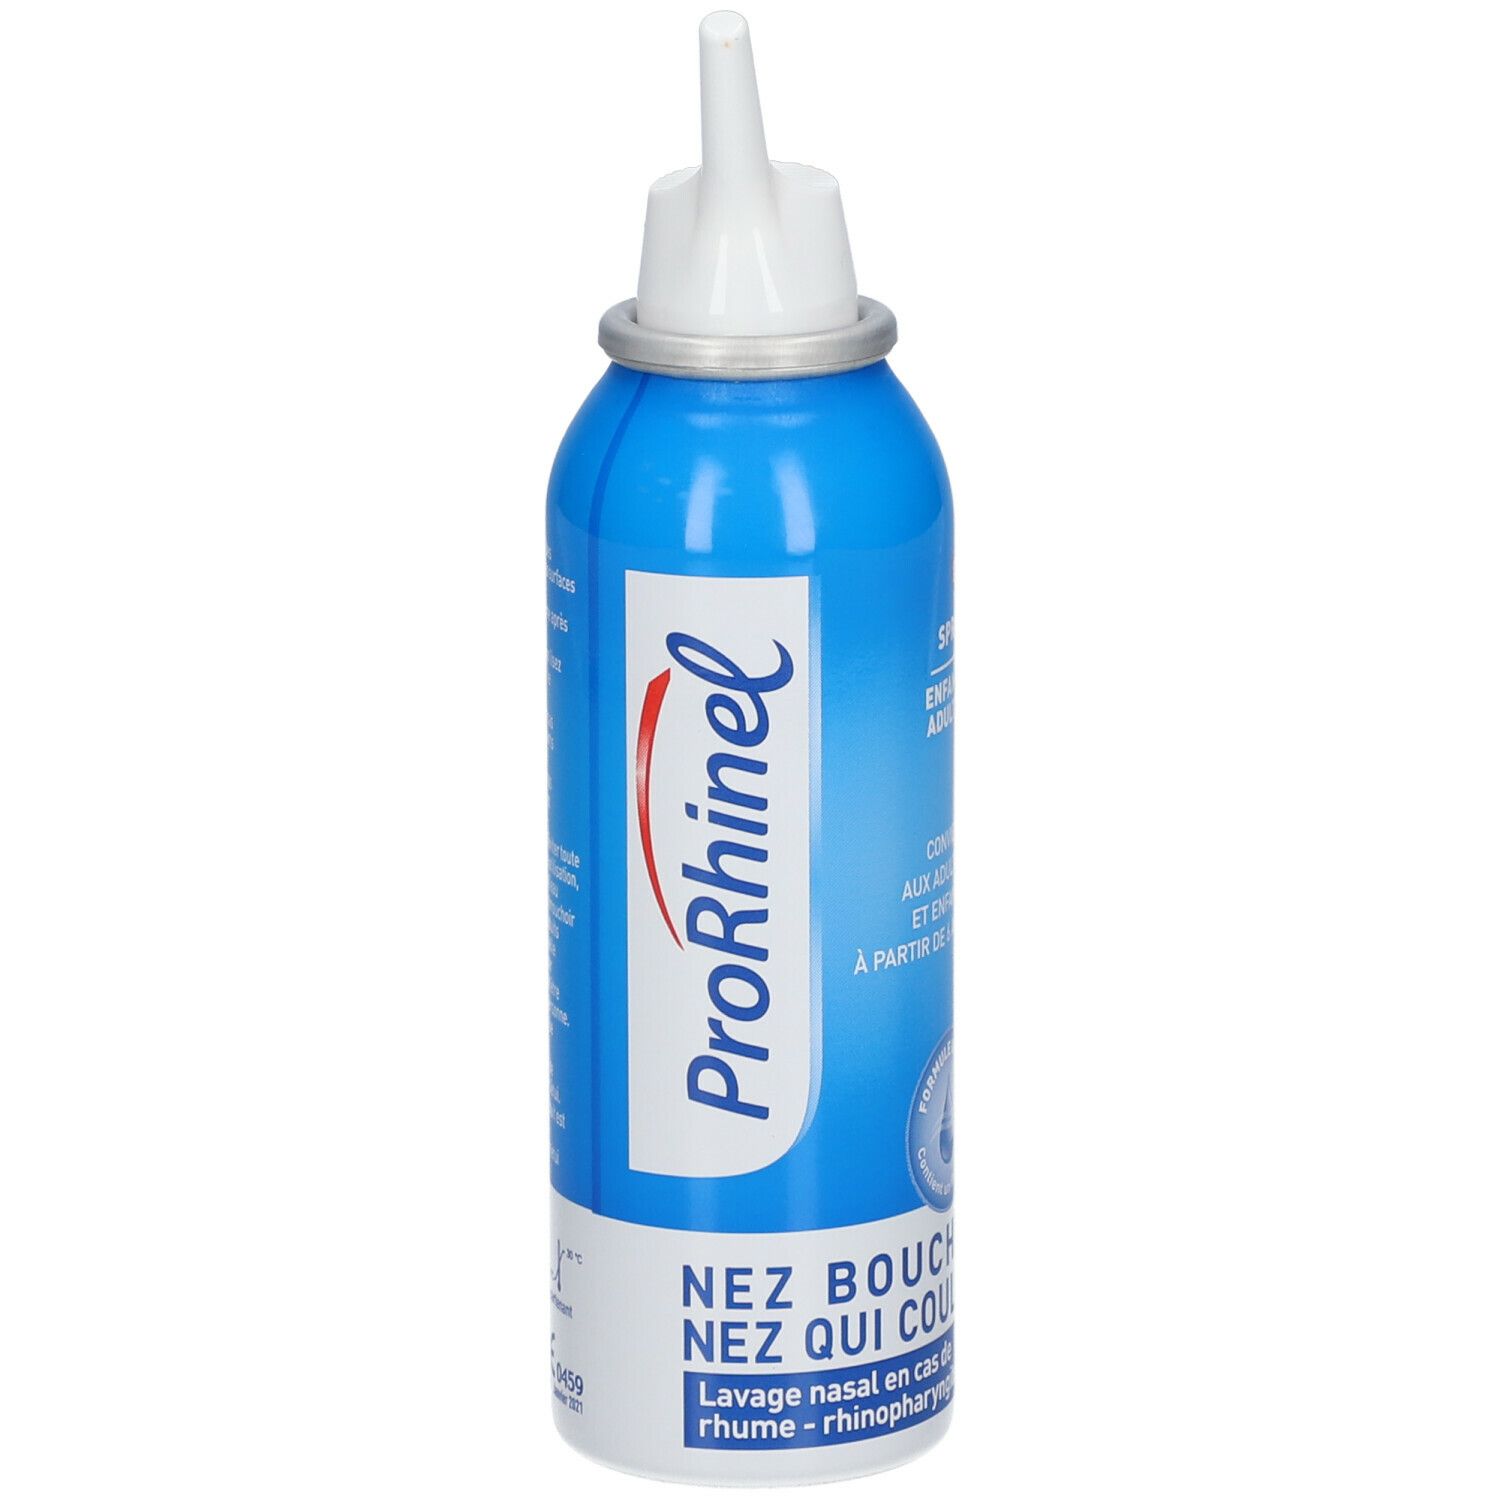 ProRhinel Naturel Spray Nasal adultes-enfants 20 ml - Redcare Pharmacie